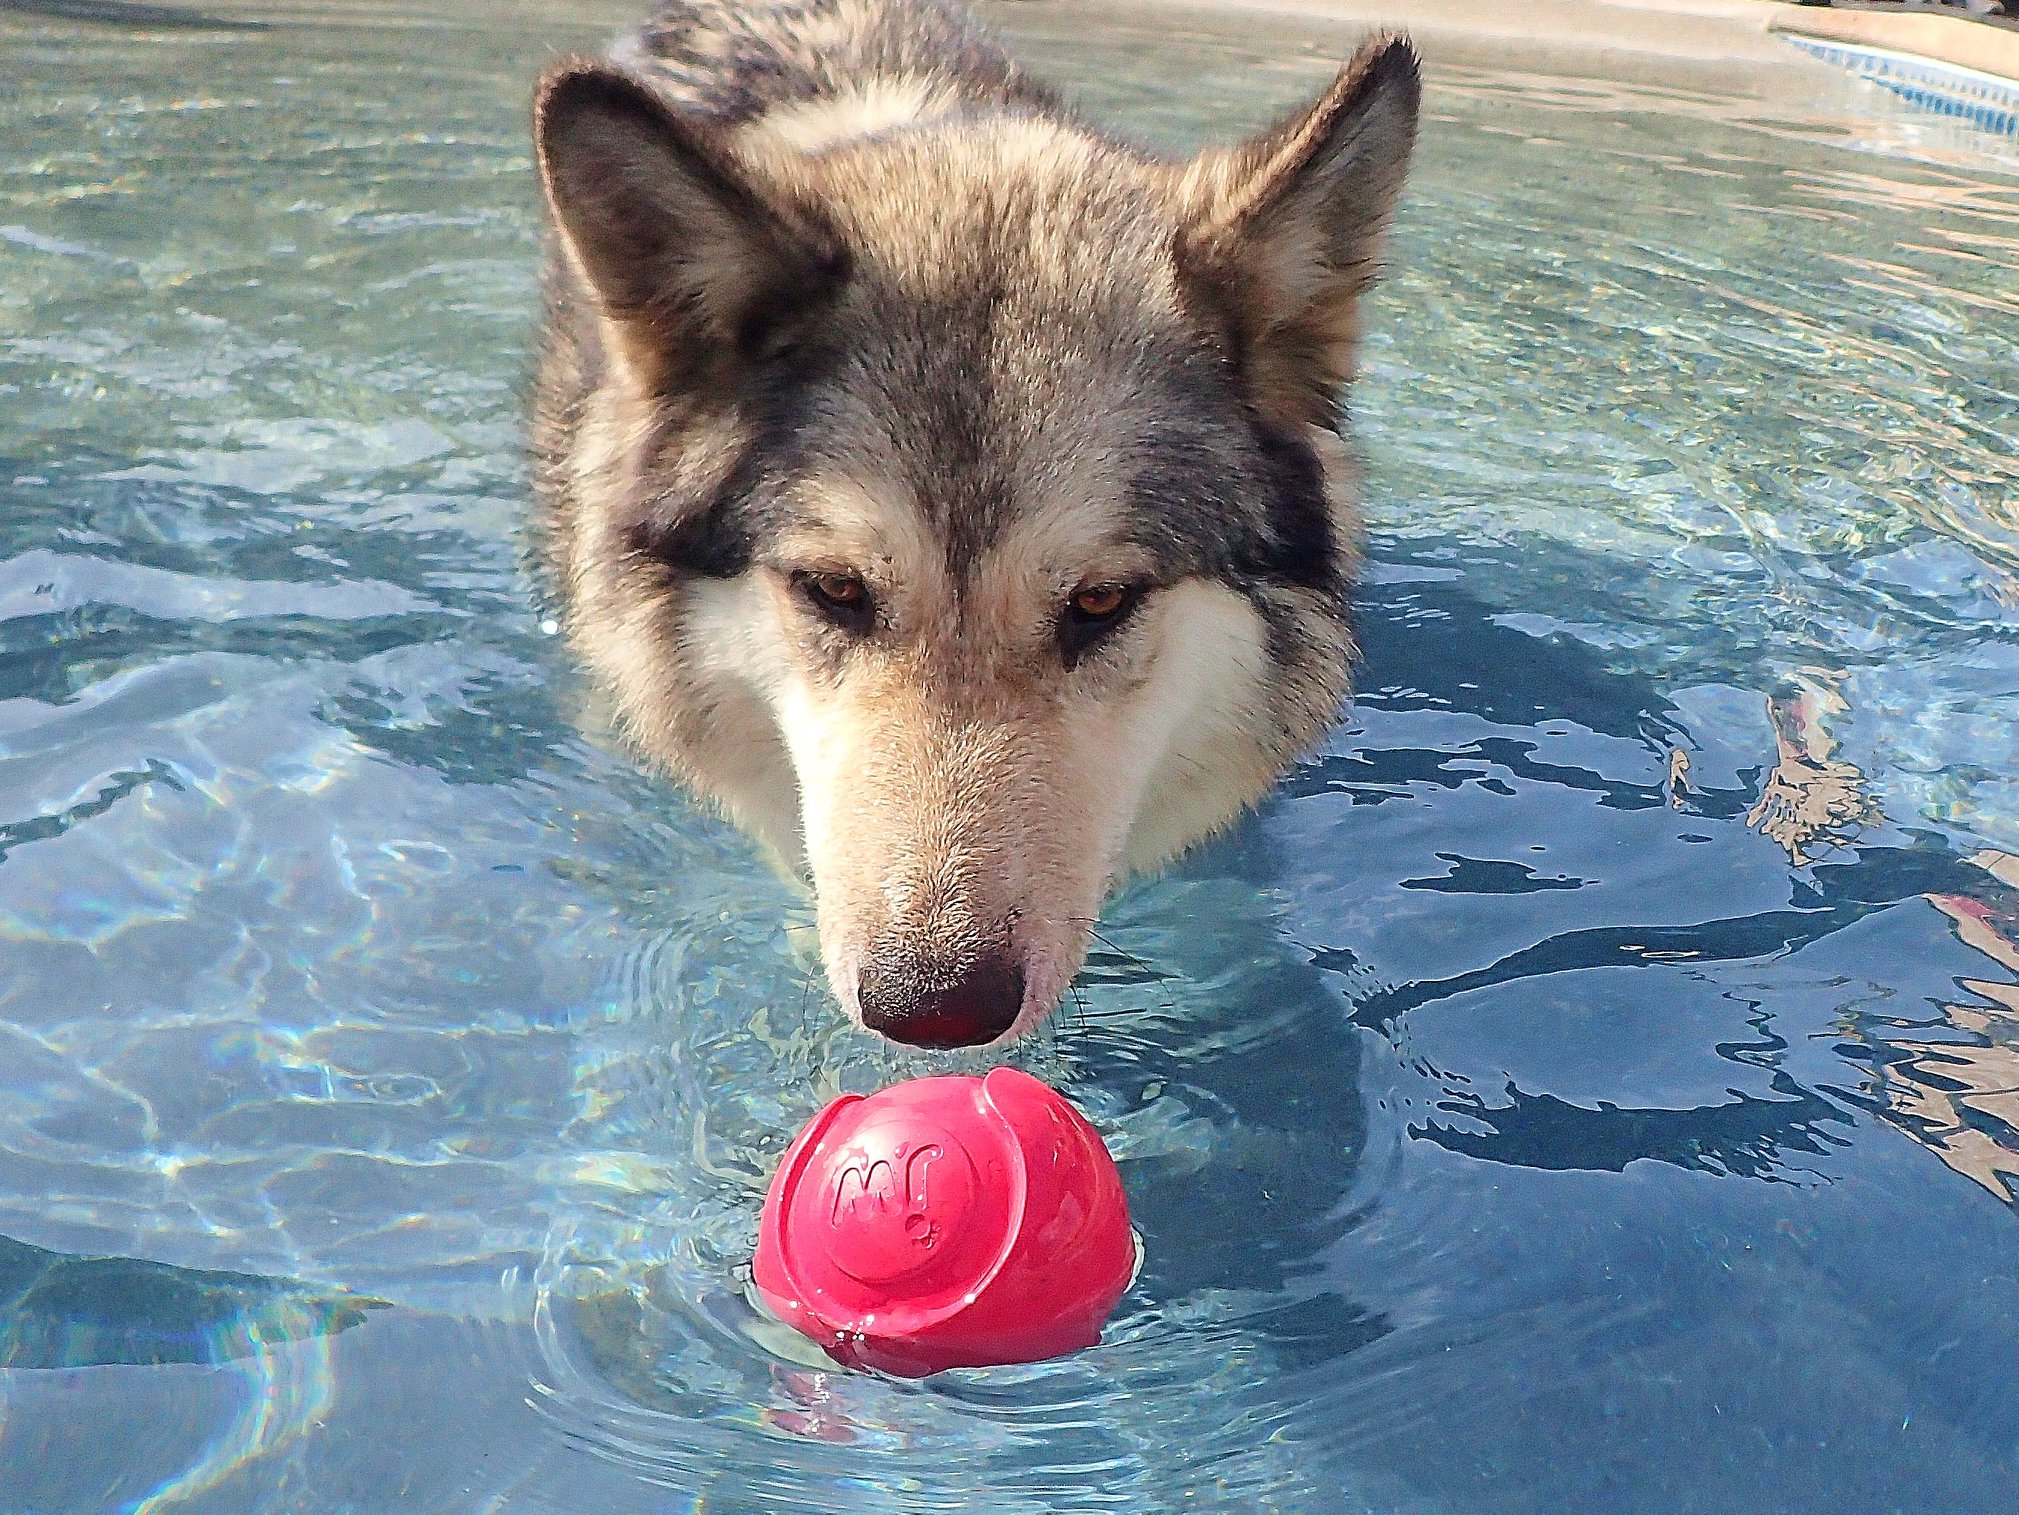 Wolfster likes to swim